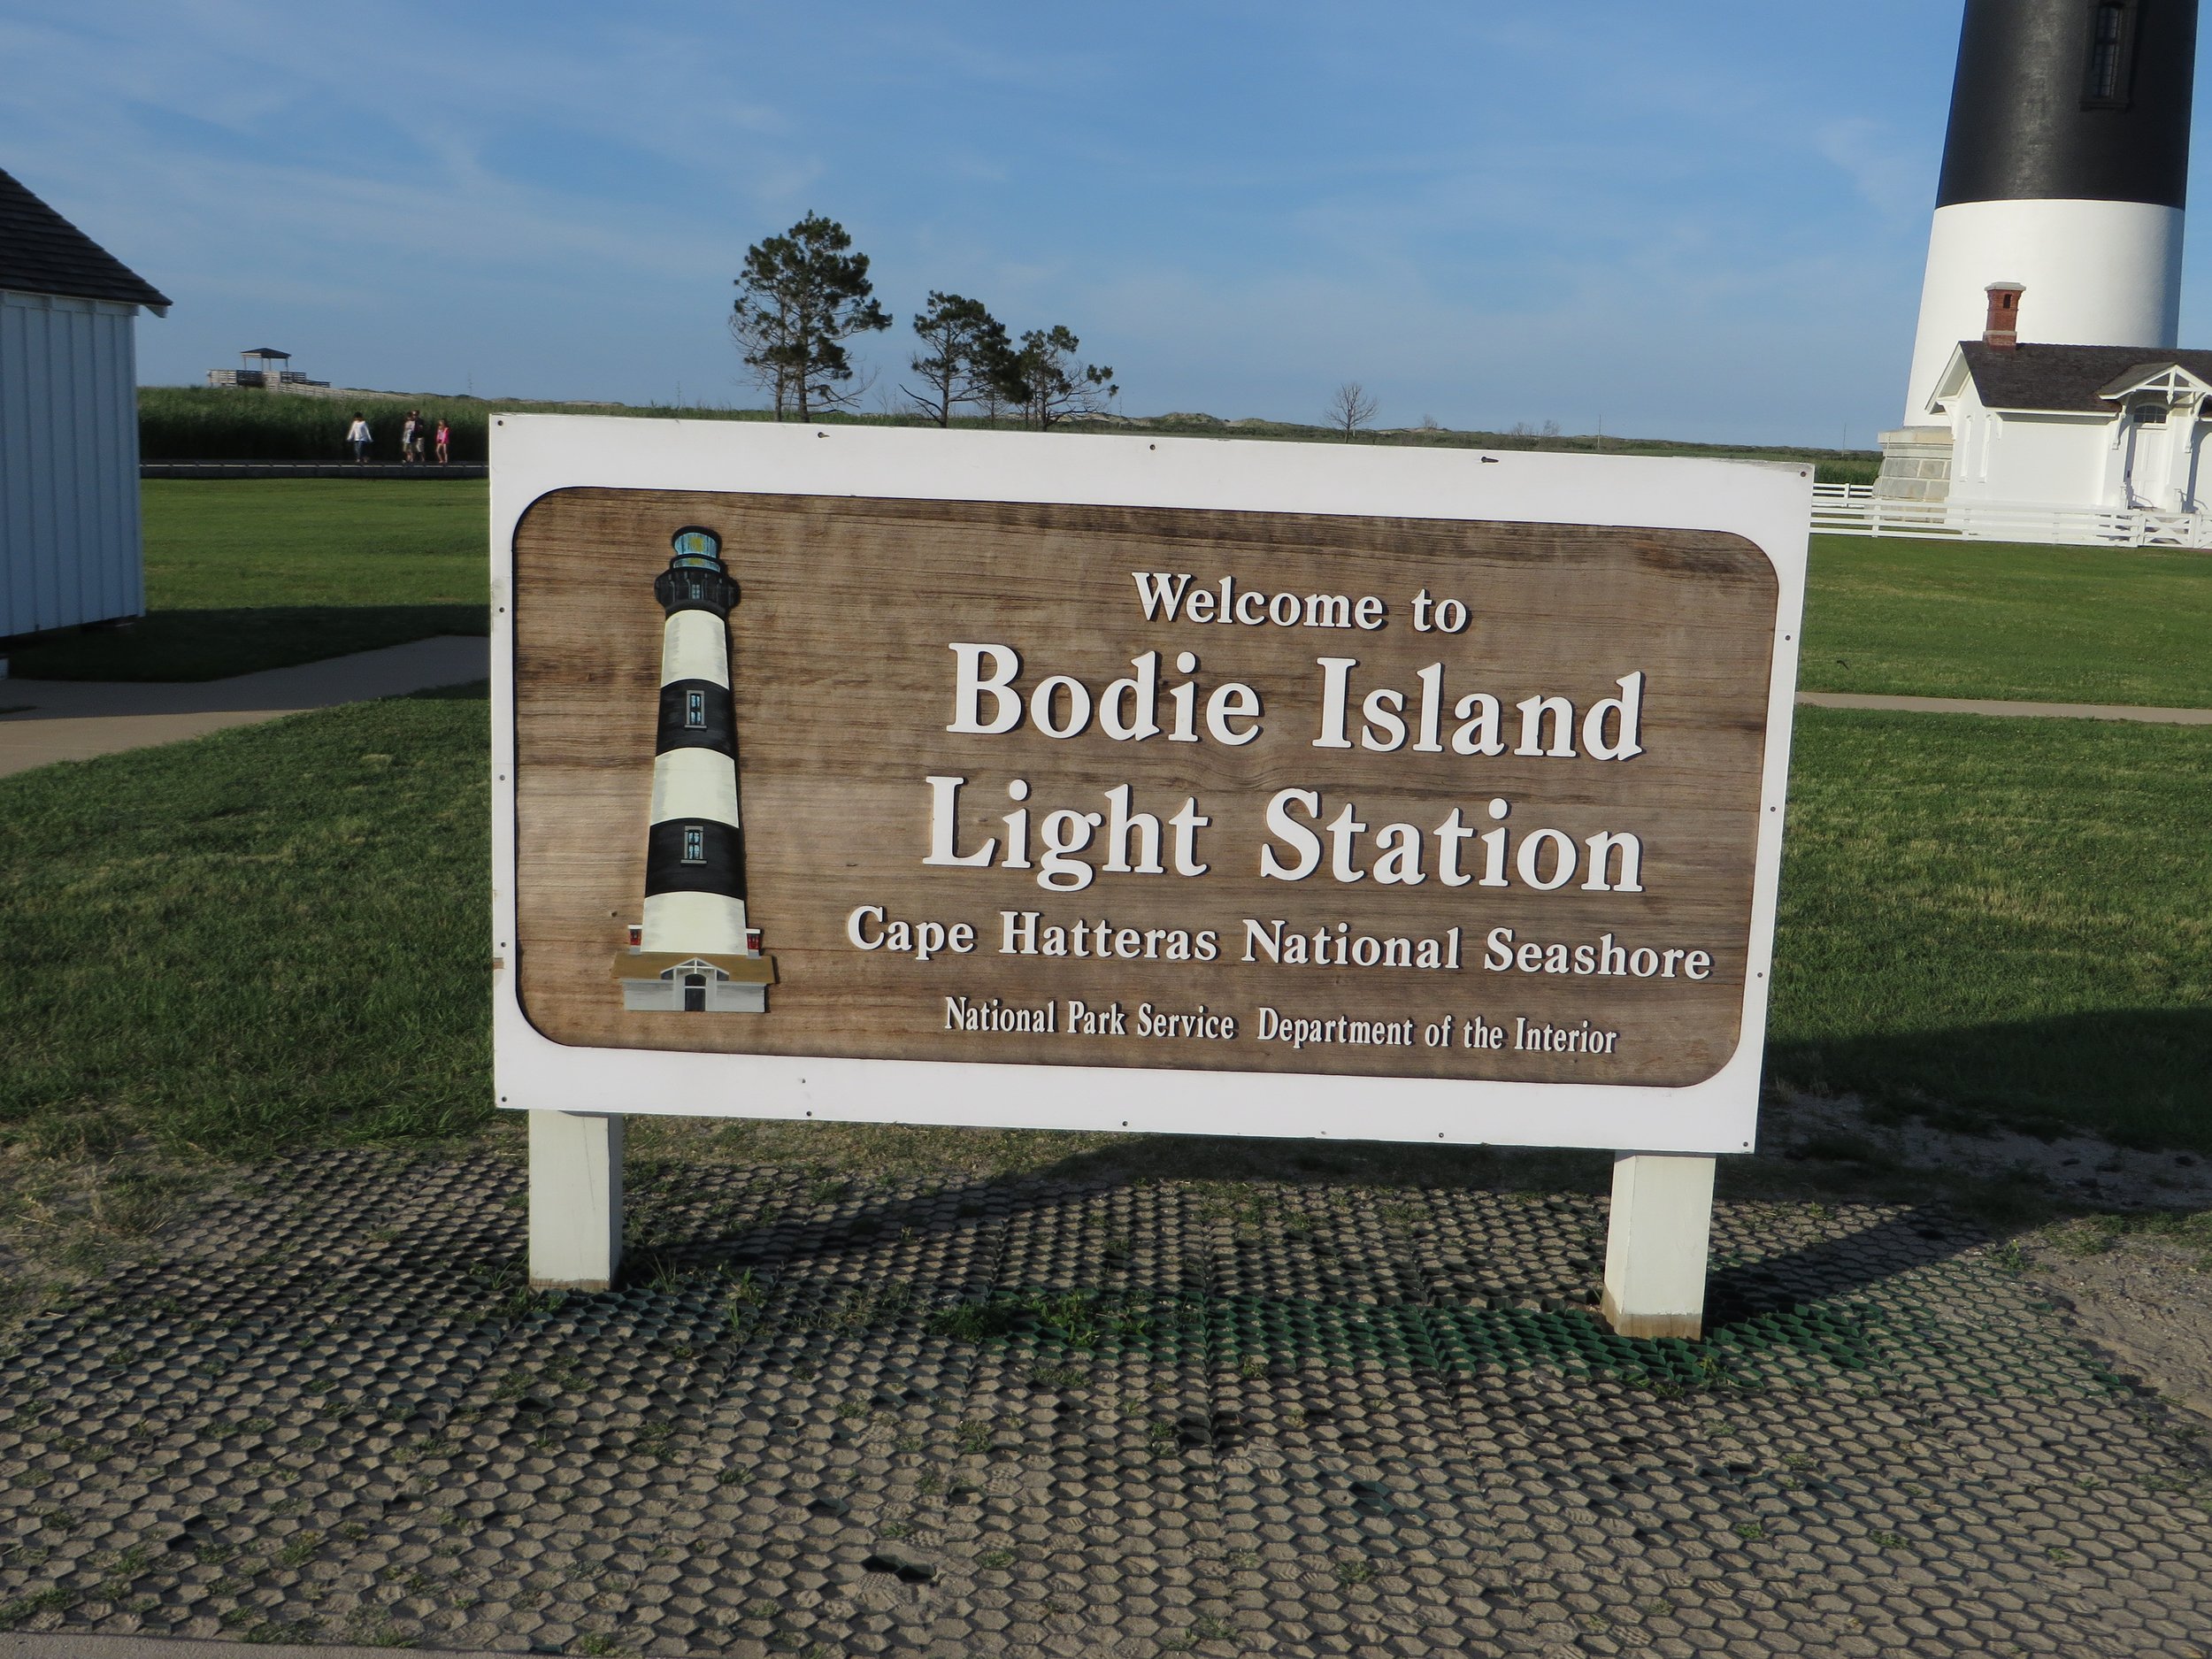 Bodie_Island_Lighthouse,_Cape_Hatteras_National_Seashore,_Outer_Banks,_North_Carolina_(14433116095).jpeg